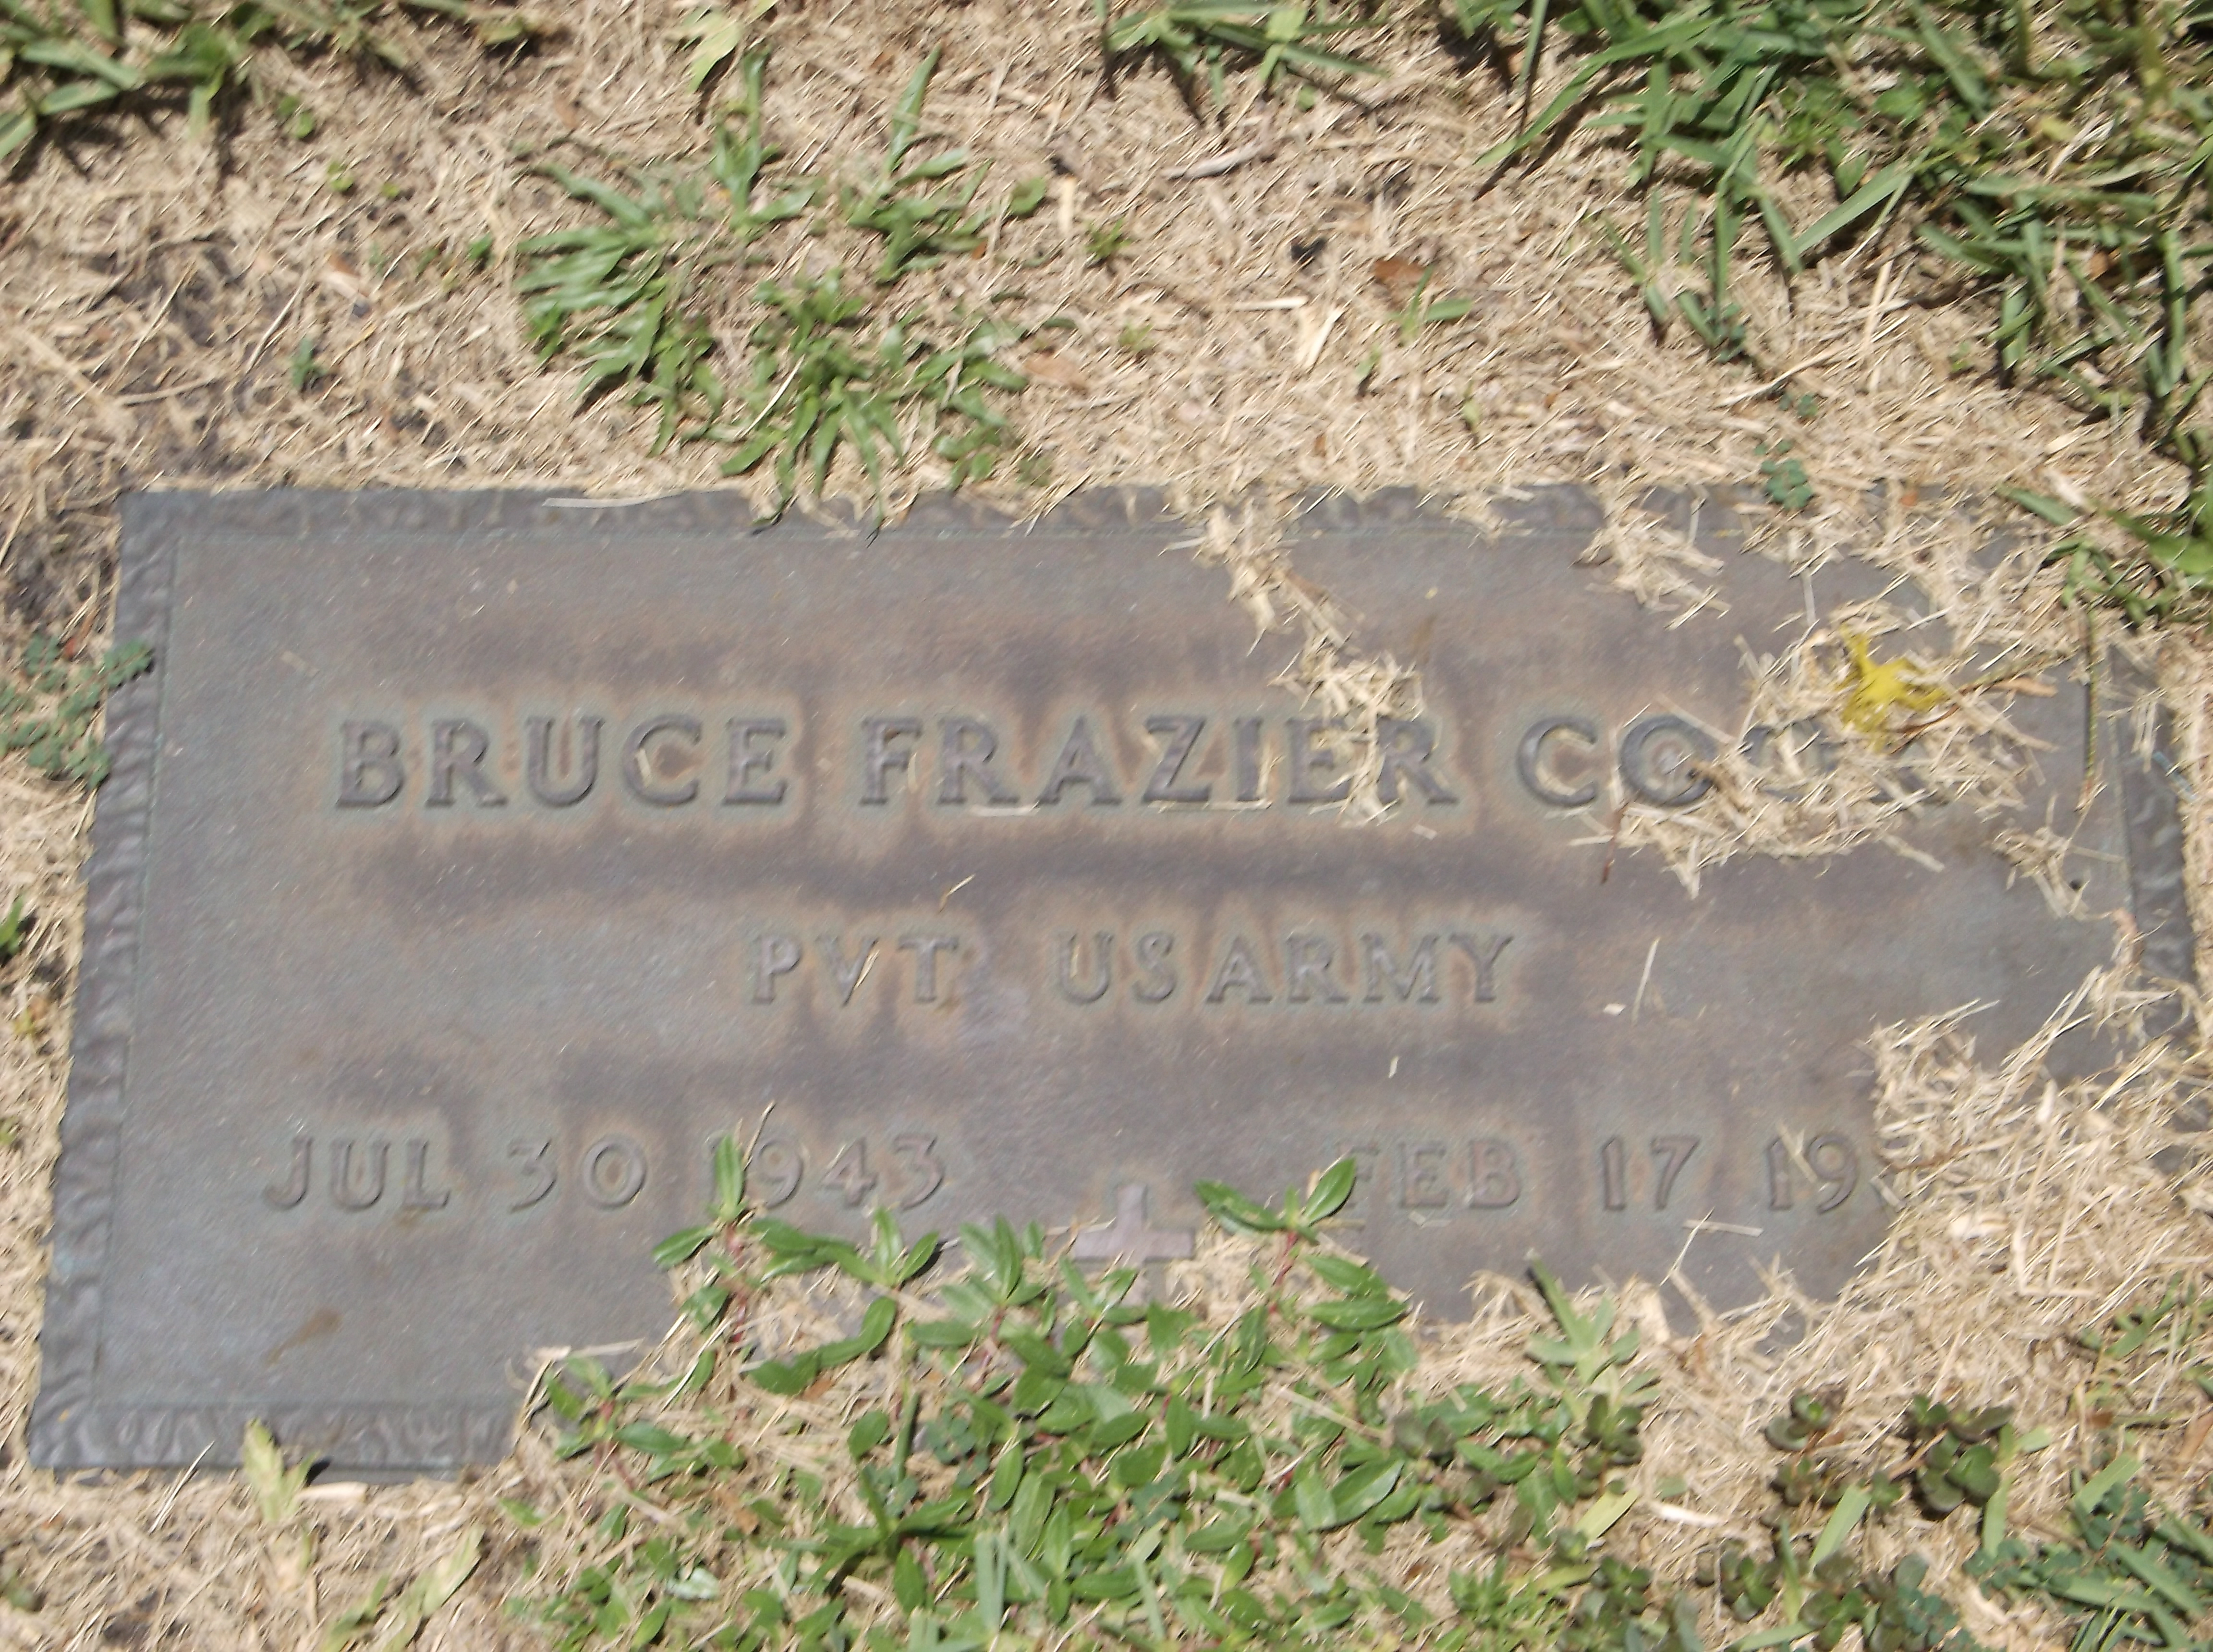 Bruce Frazier Cook